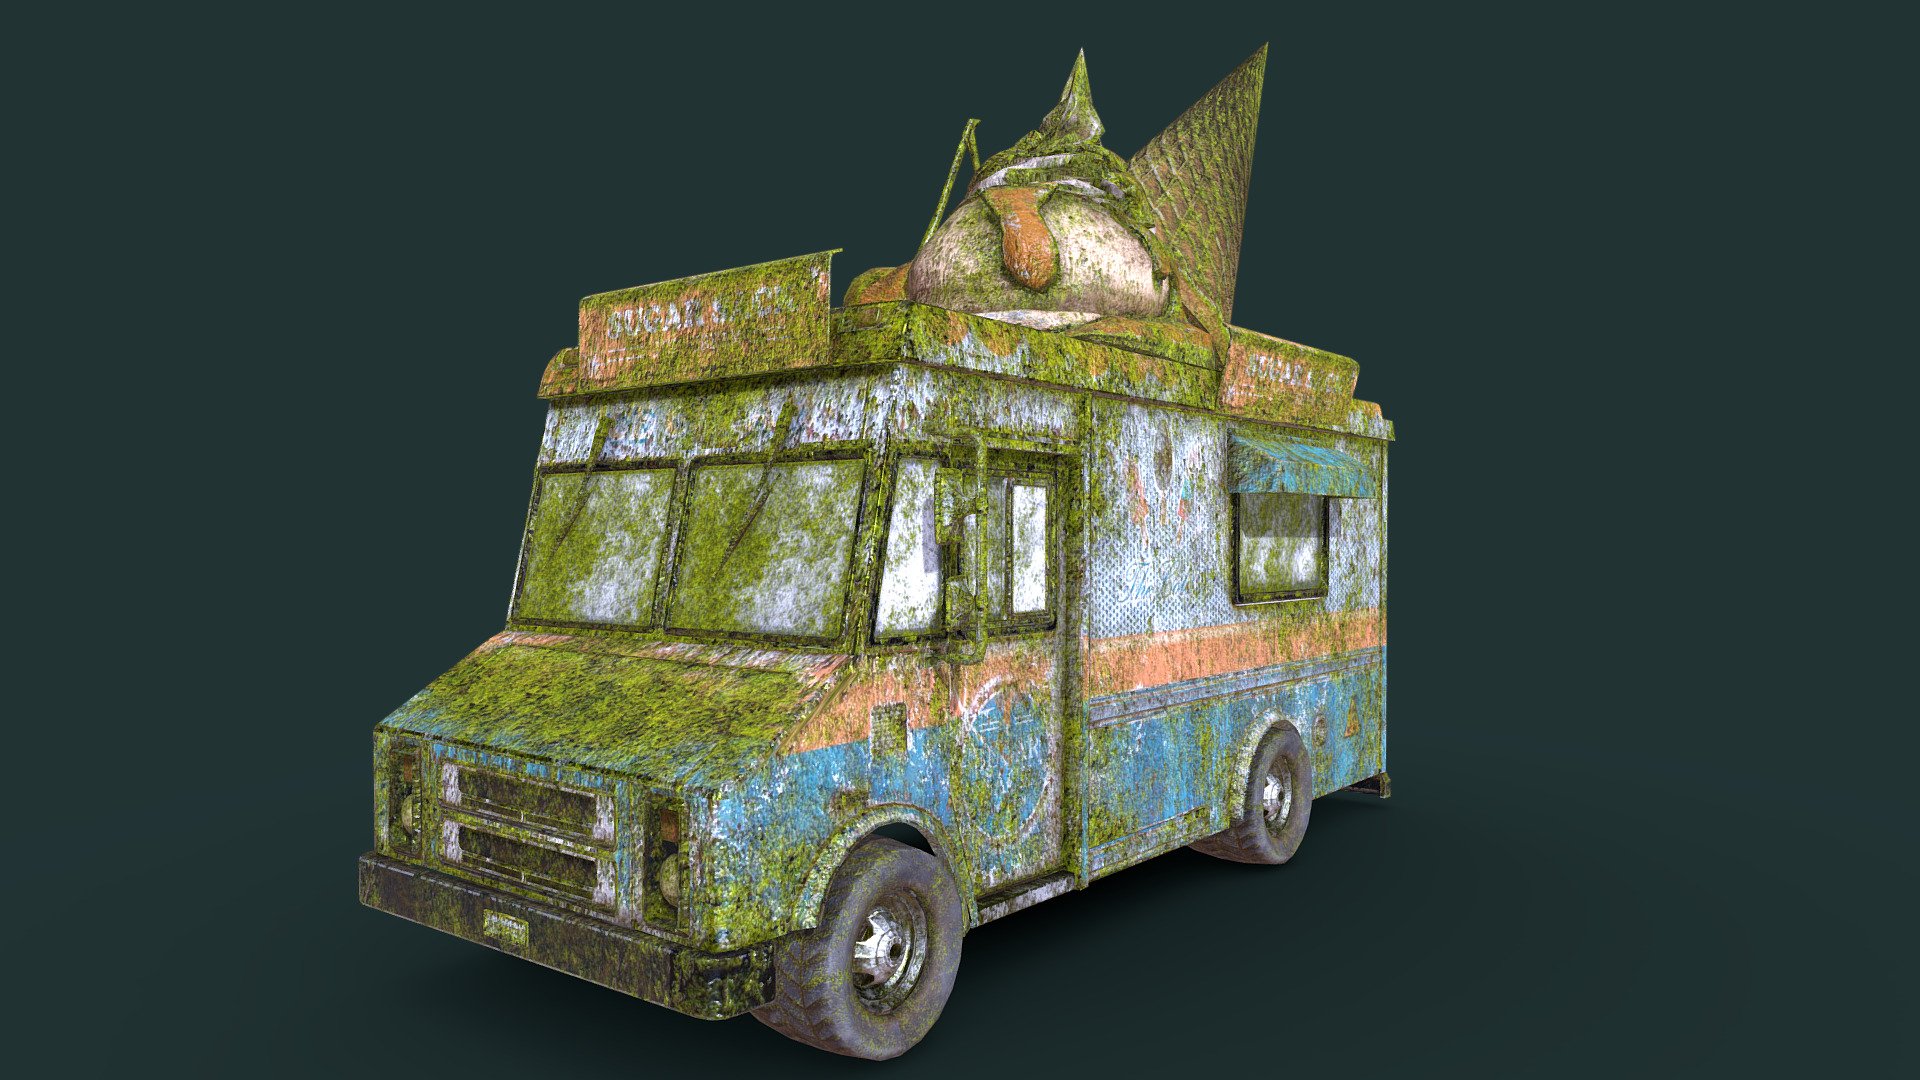 Mossy Old Ice Cream Truck